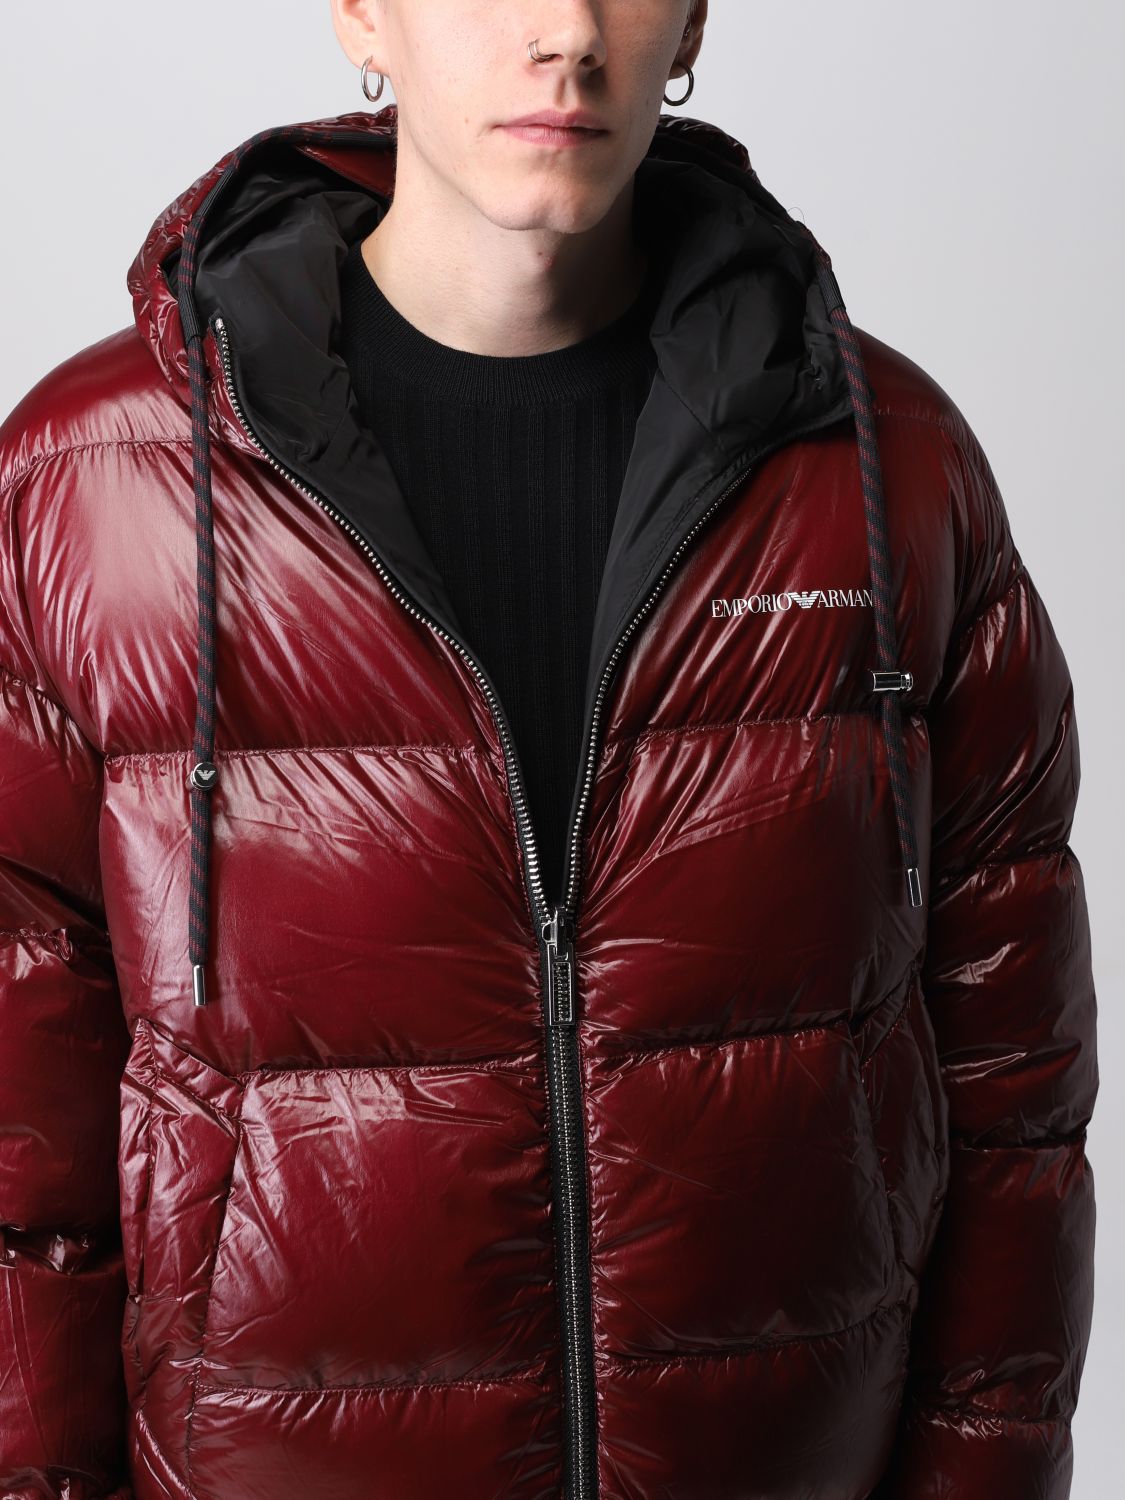 zag oplichter Bel terug Emporio Armani Outlet: jacket for man - Black | Emporio Armani jacket  6L1BP31NNBZ online on GIGLIO.COM